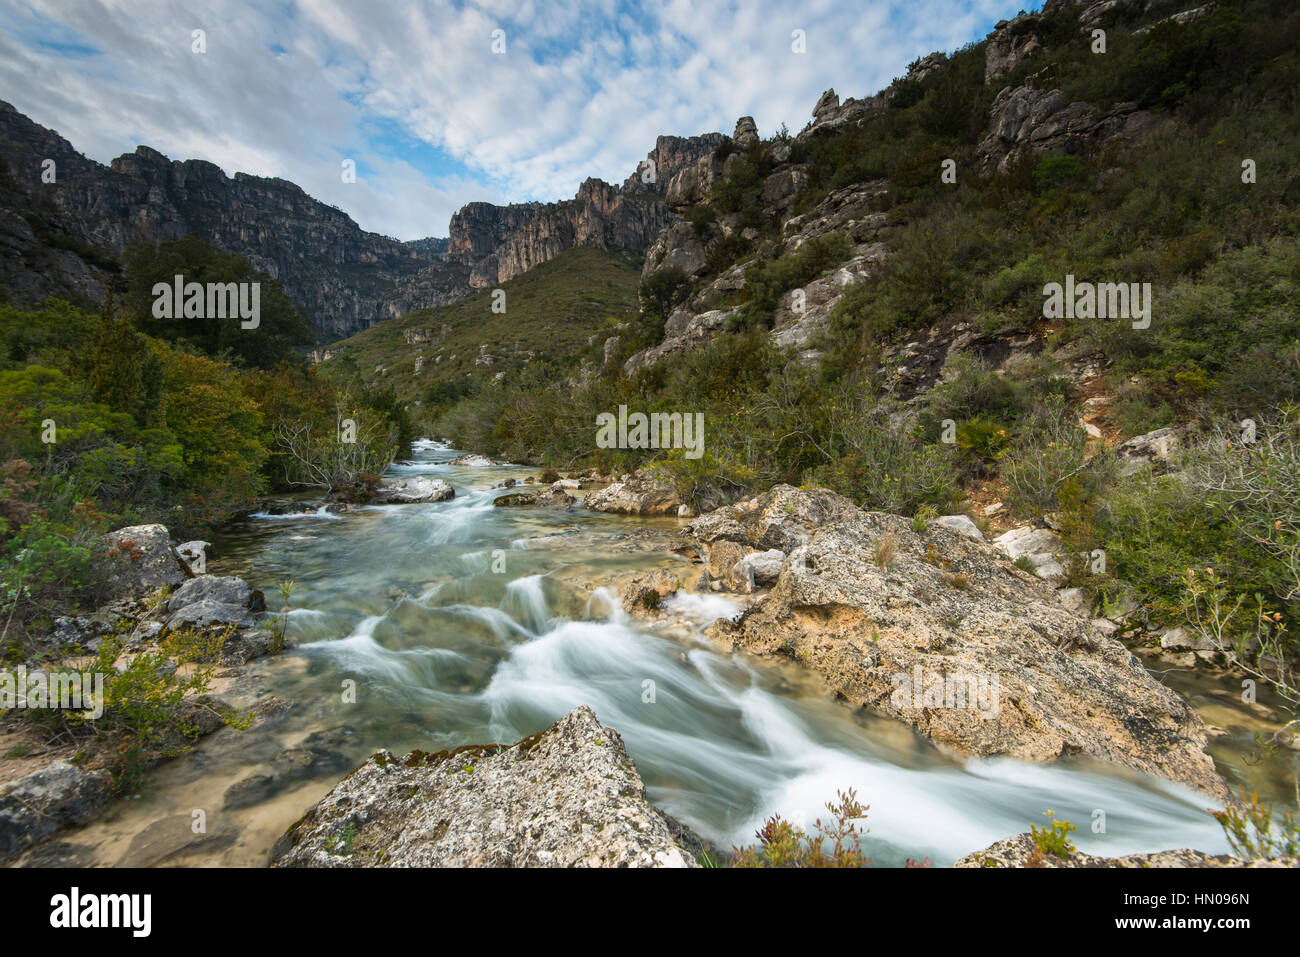 Che scorre veloce creek in Els porte parco naturale, Spagna Foto Stock